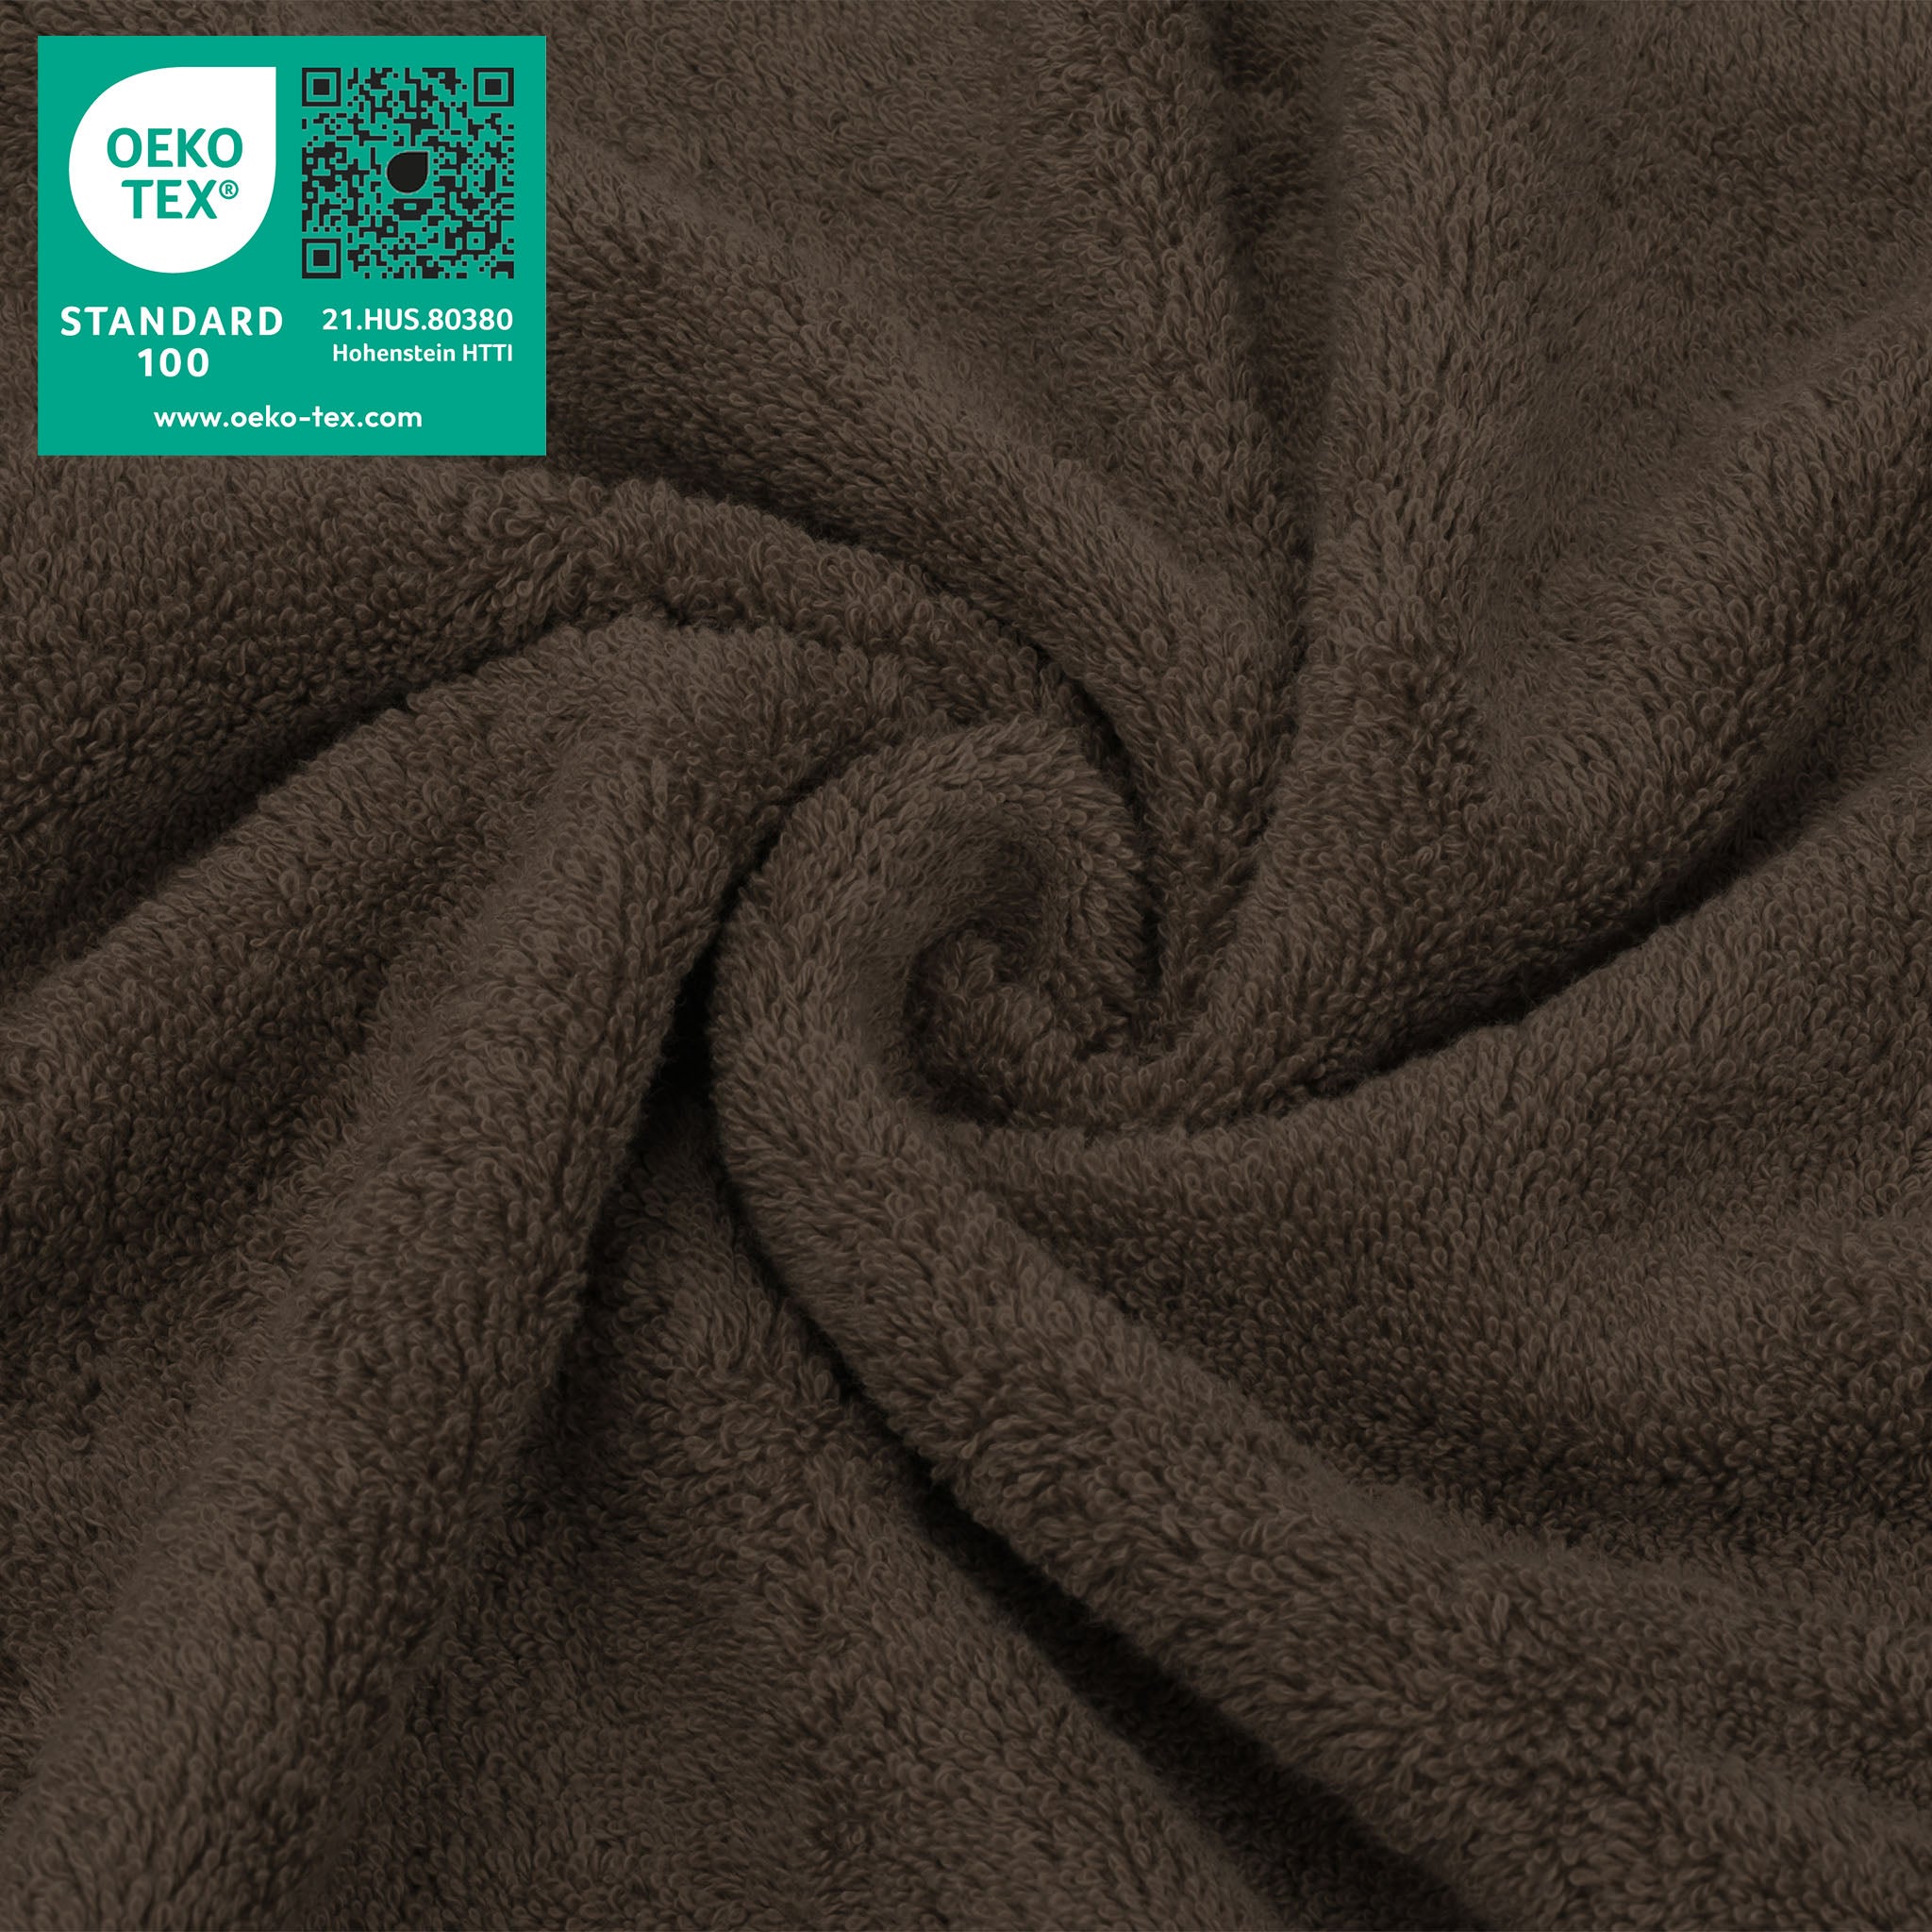 Maleigh 100% Turkish Cotton Washcloths (Set of 4) Ebern Designs Color: Rockridge Gray